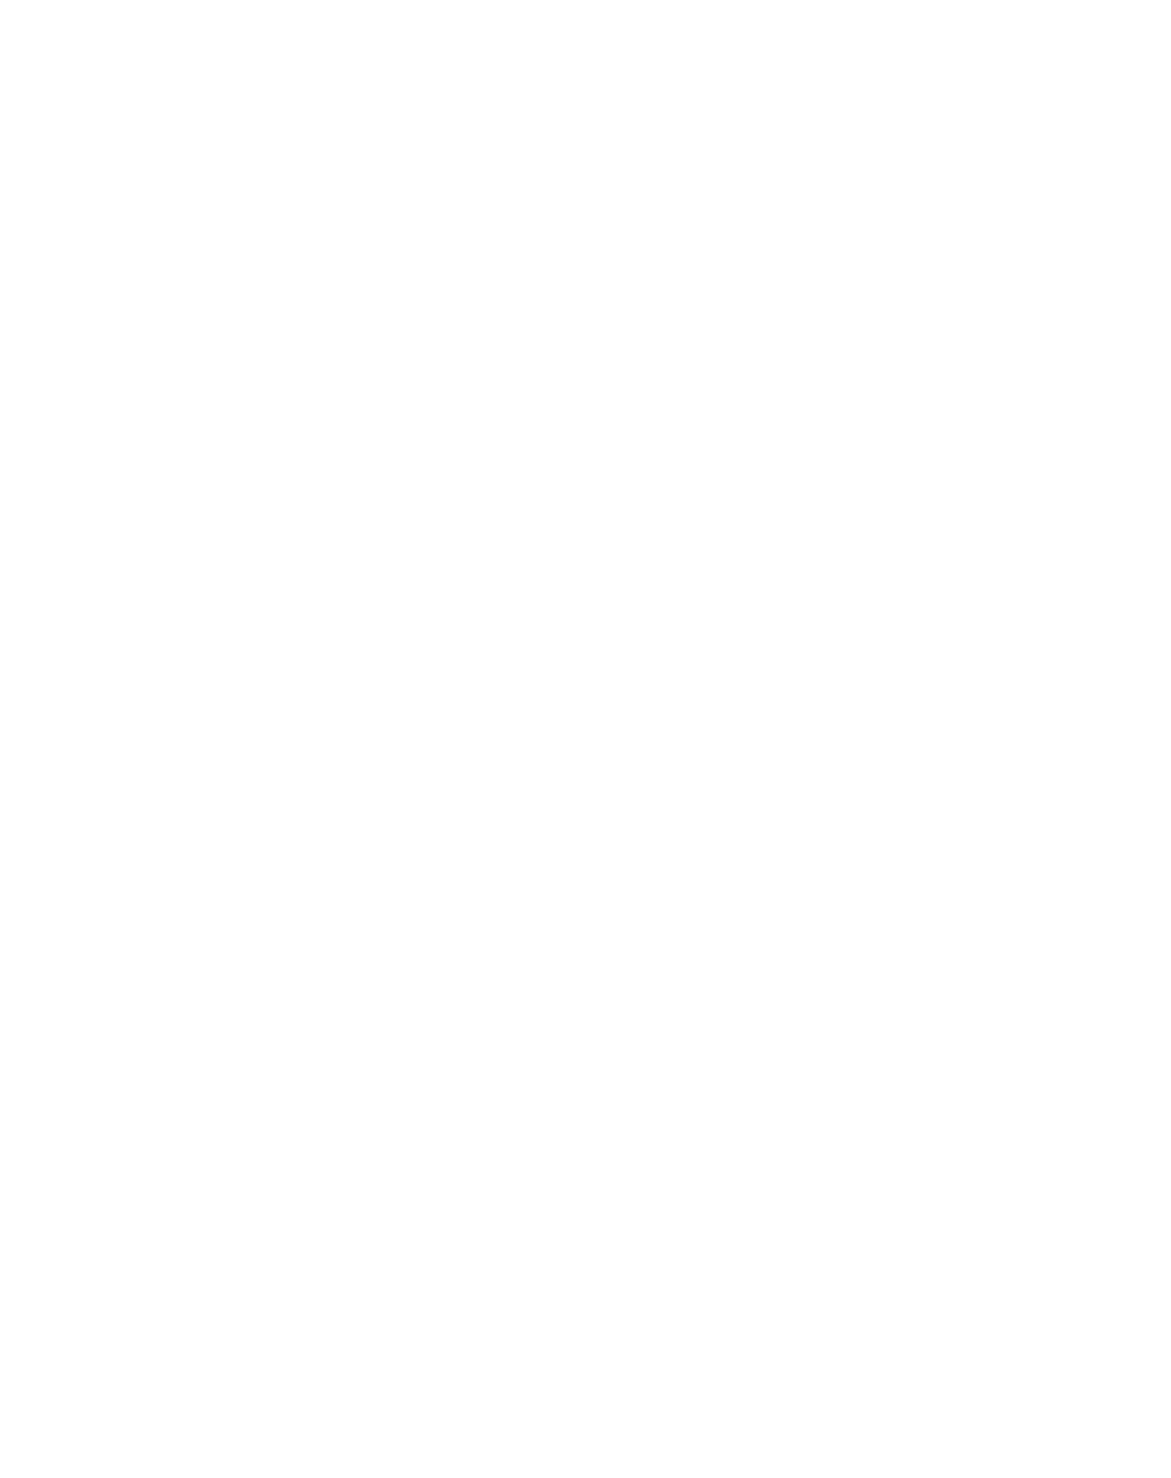 Nihon Falcom logo for dark backgrounds (transparent PNG)